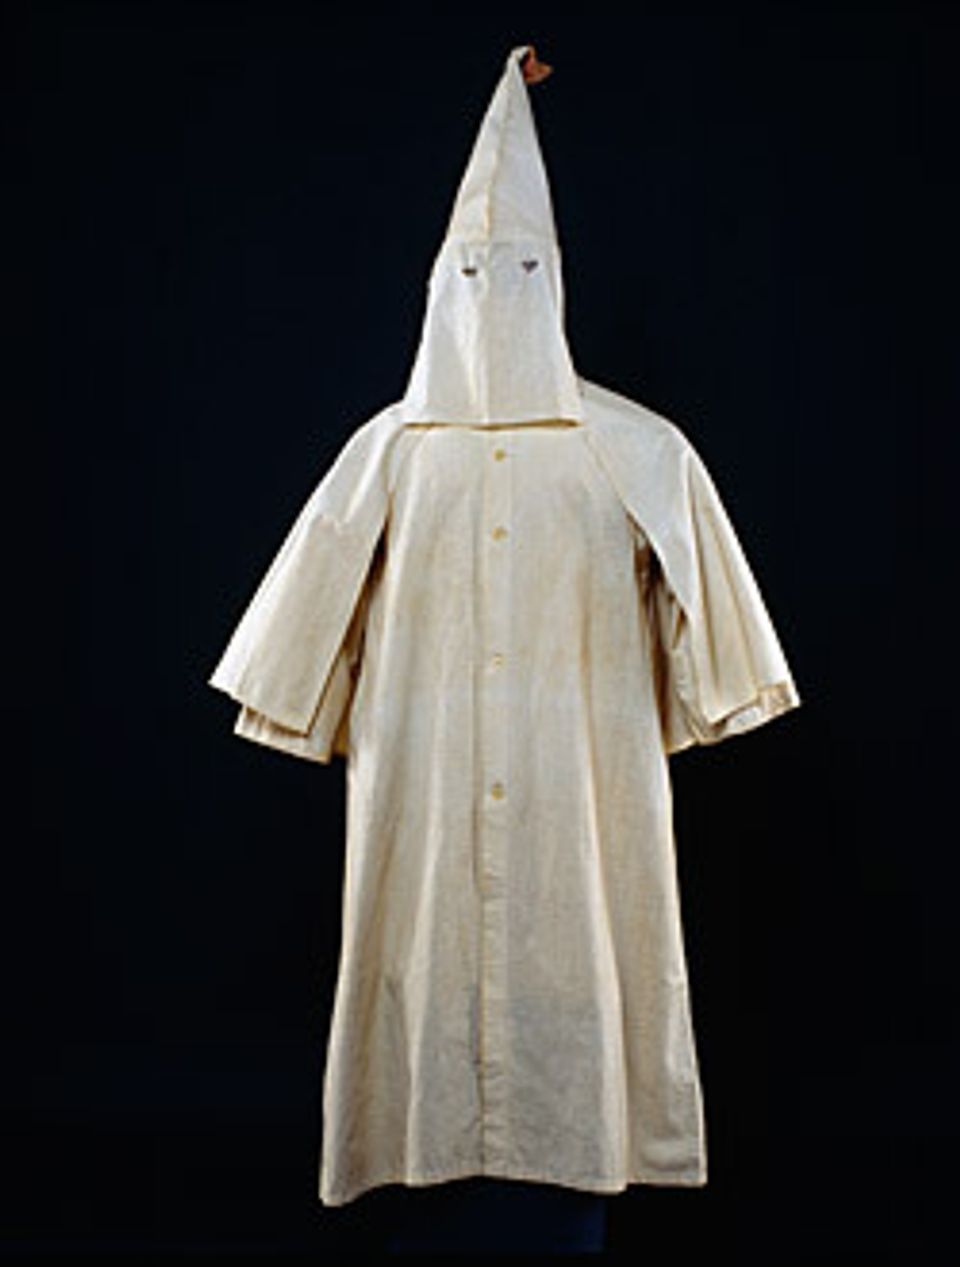 A photograph of a KKK outfit